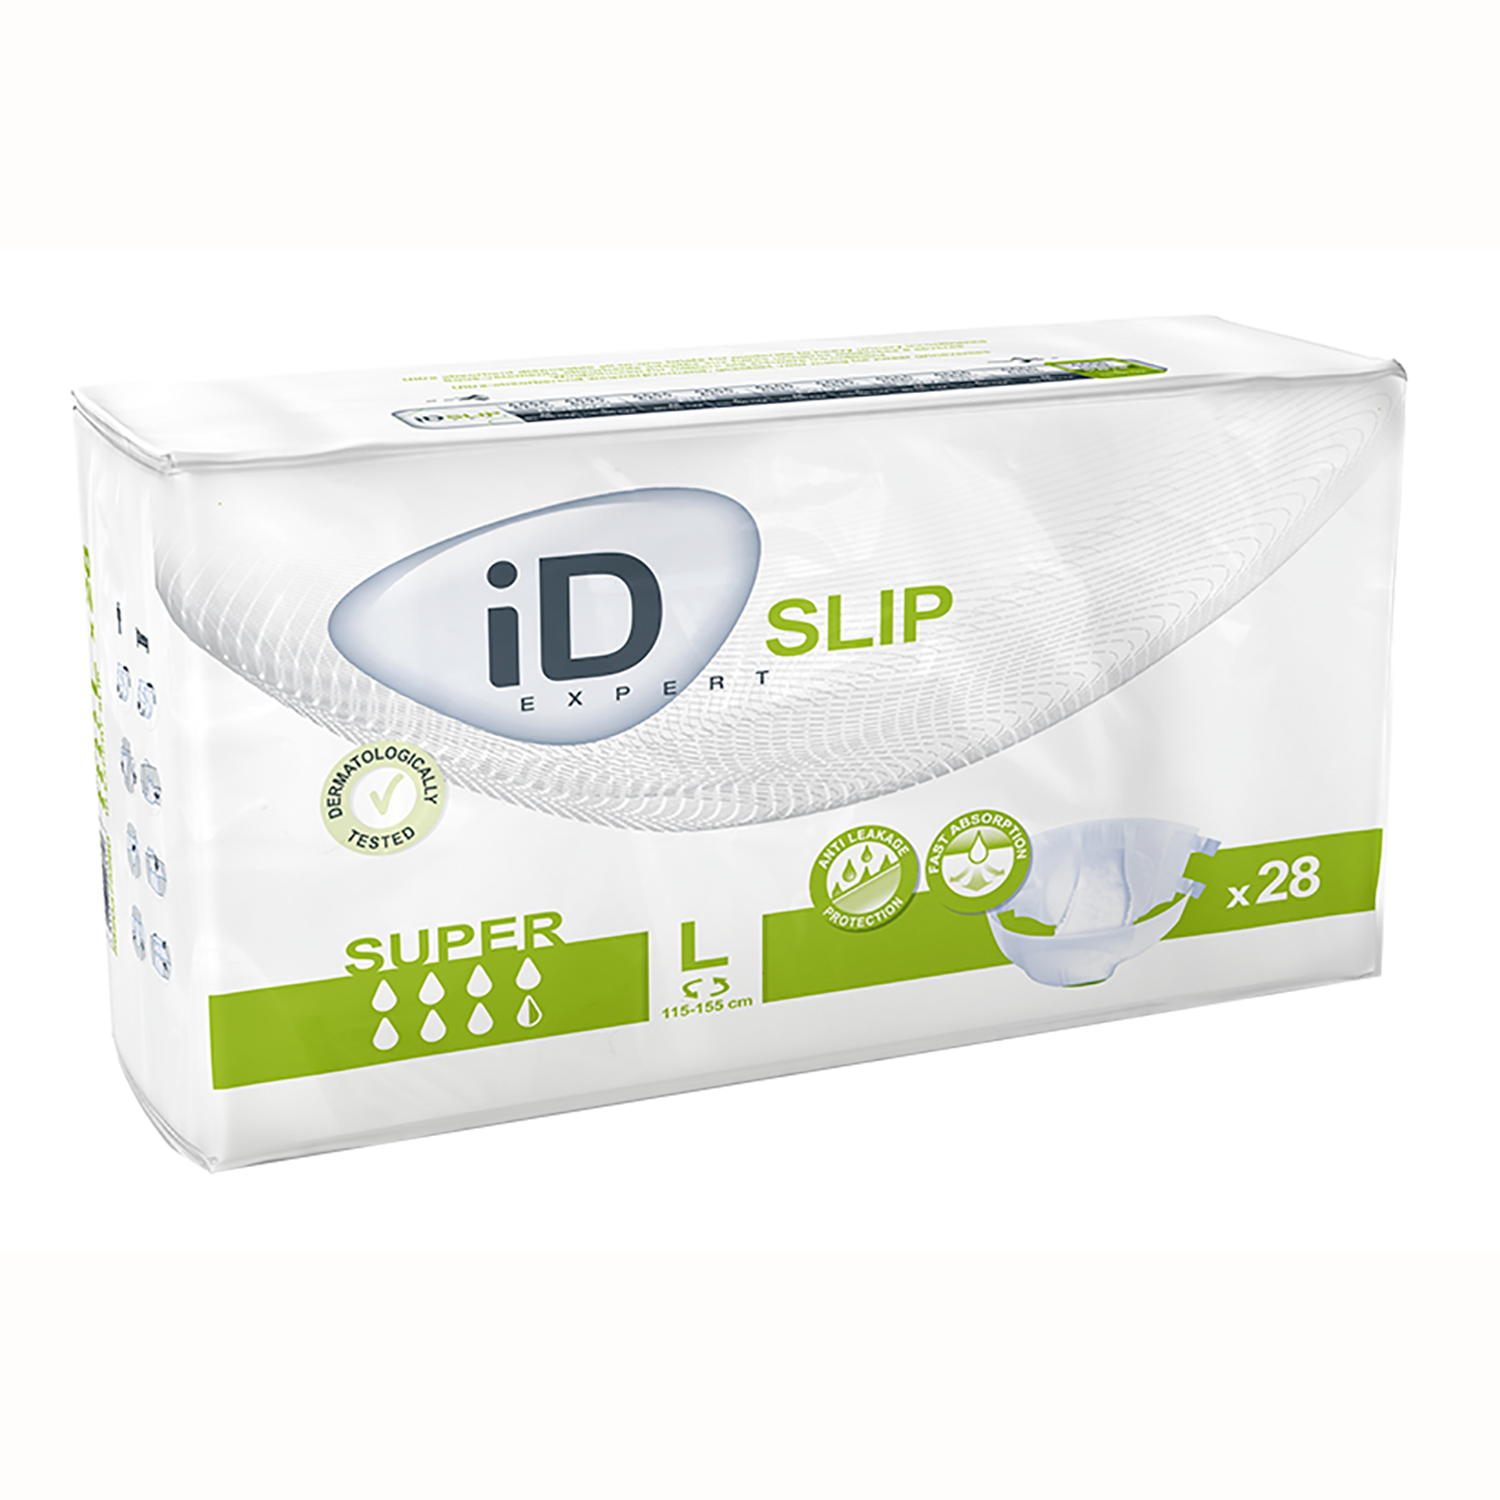 iD Expert Slip PE Super Large | Pack of of 28 x 3 (1)